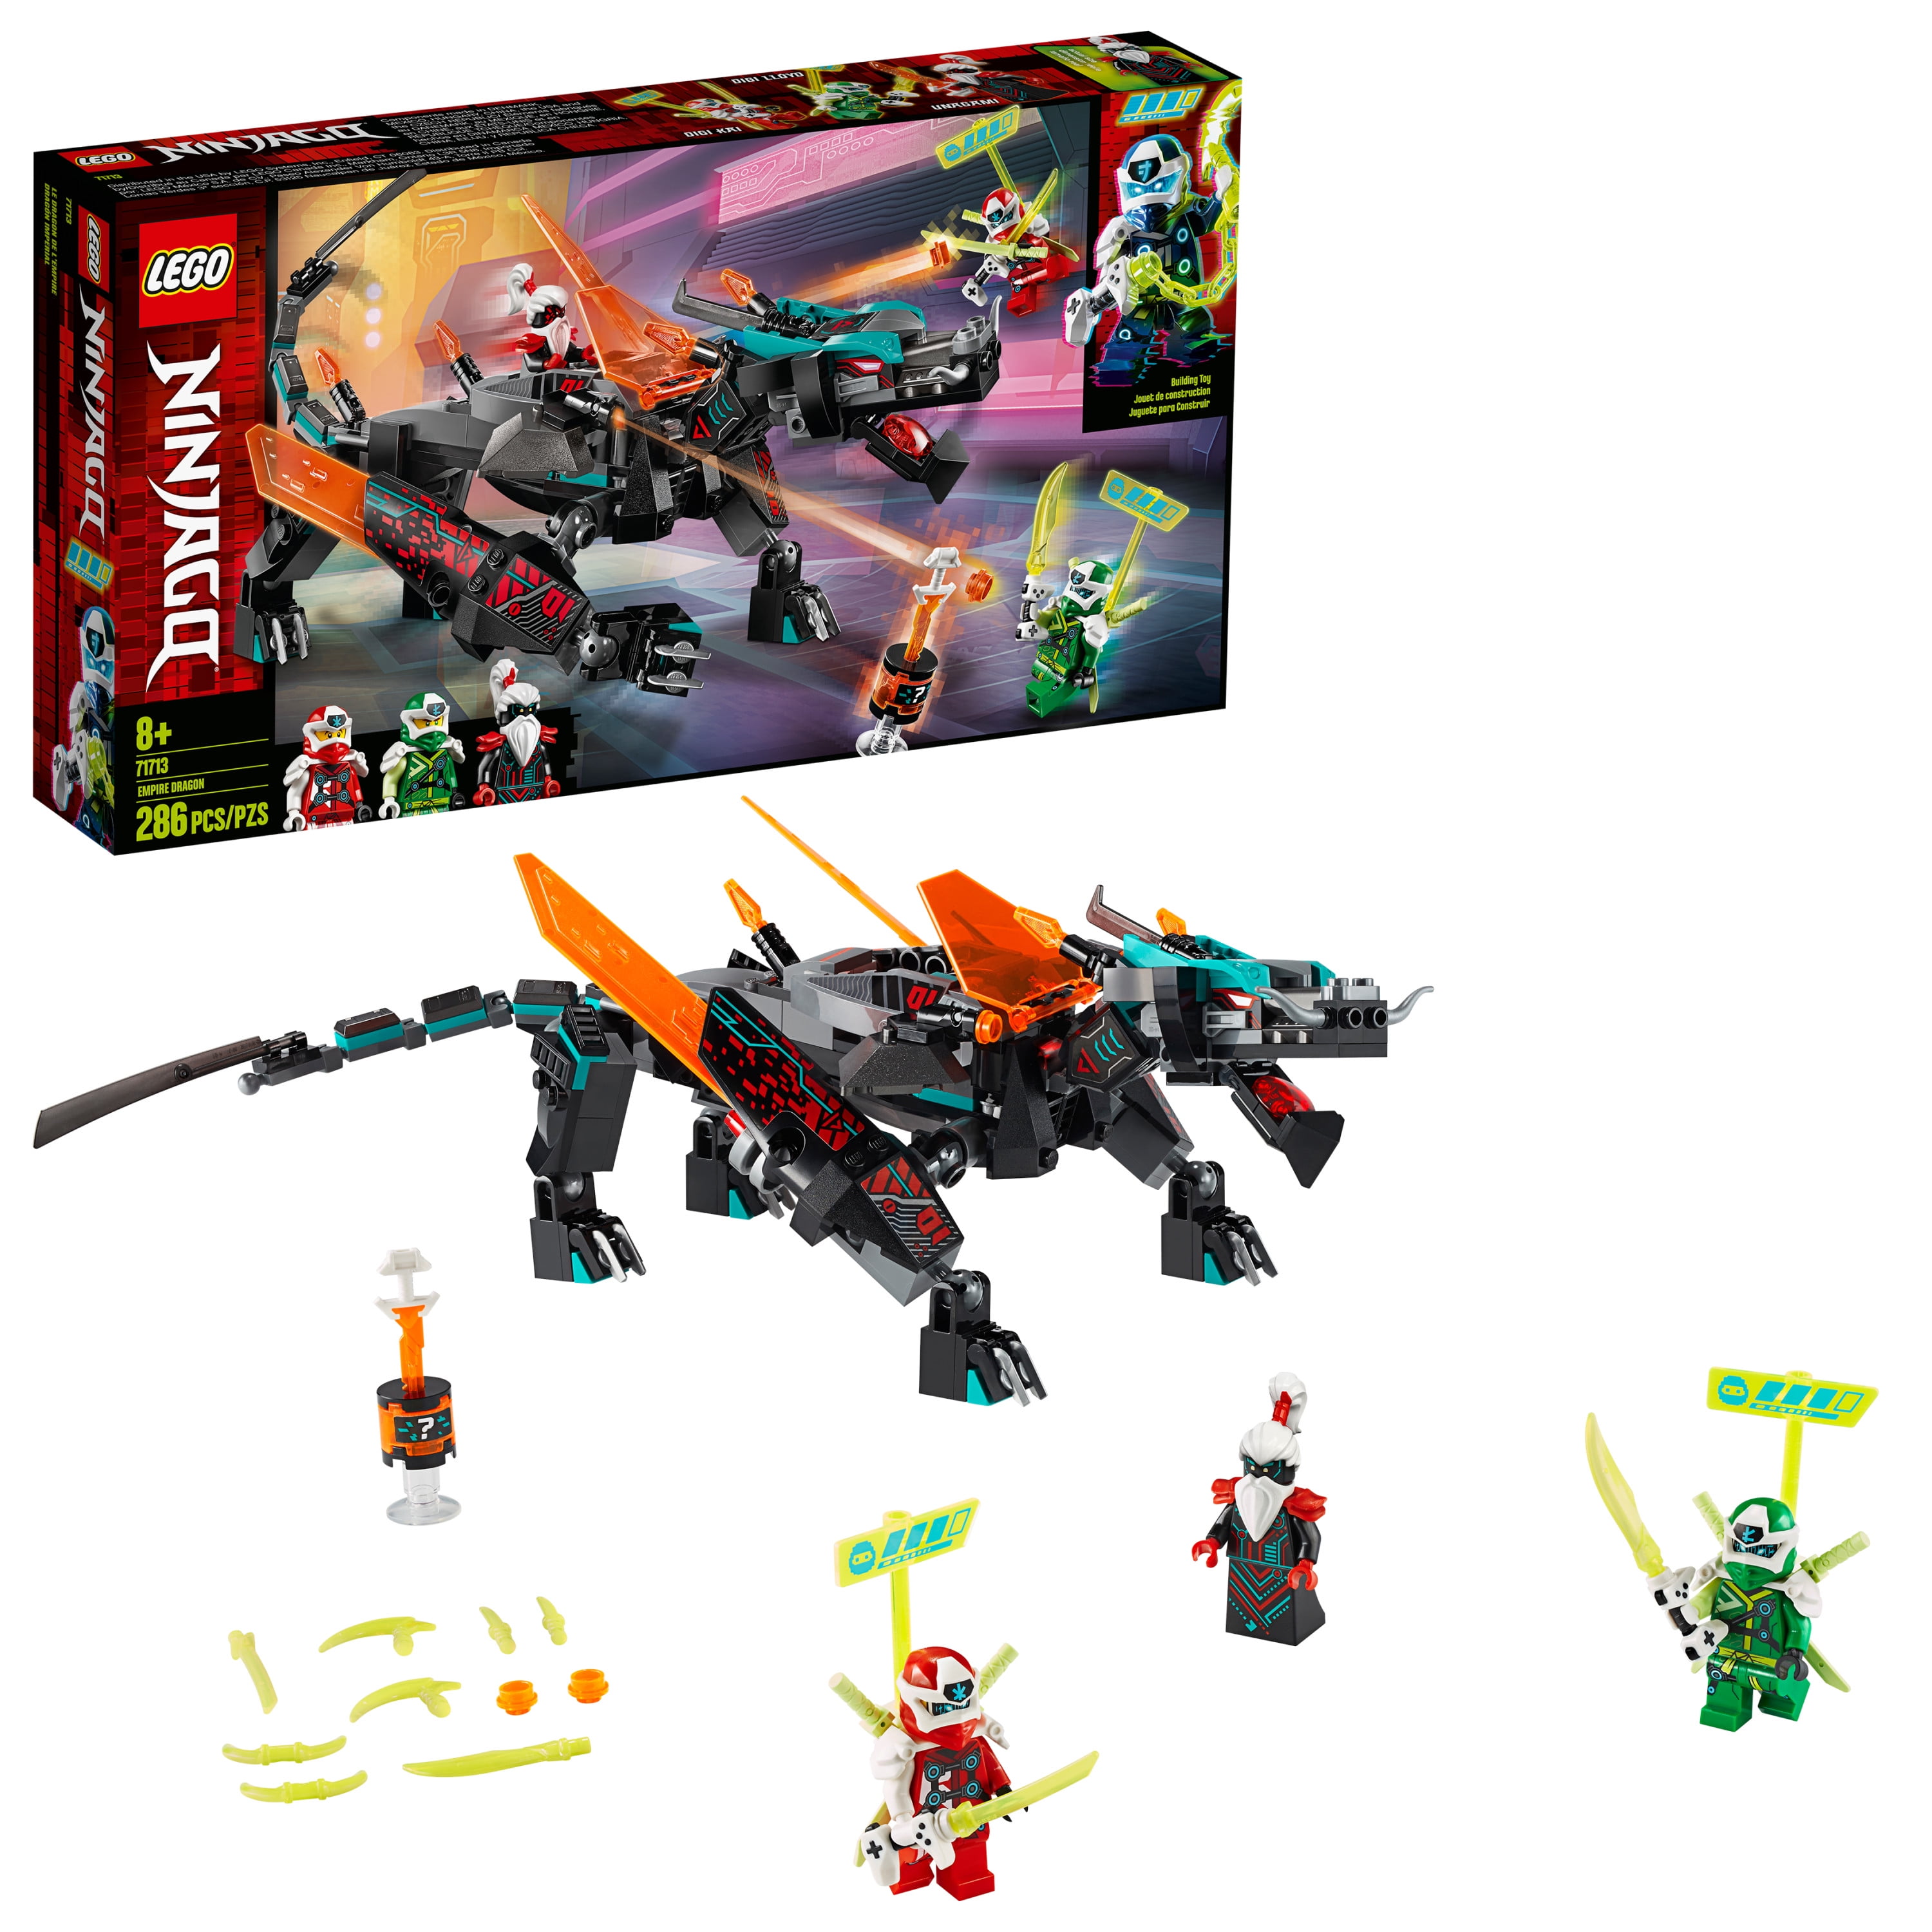 LEGO NINJAGO Empire Dragon 71713 Ninja Hero Building Toy Ages 8 and up (286 Pieces)